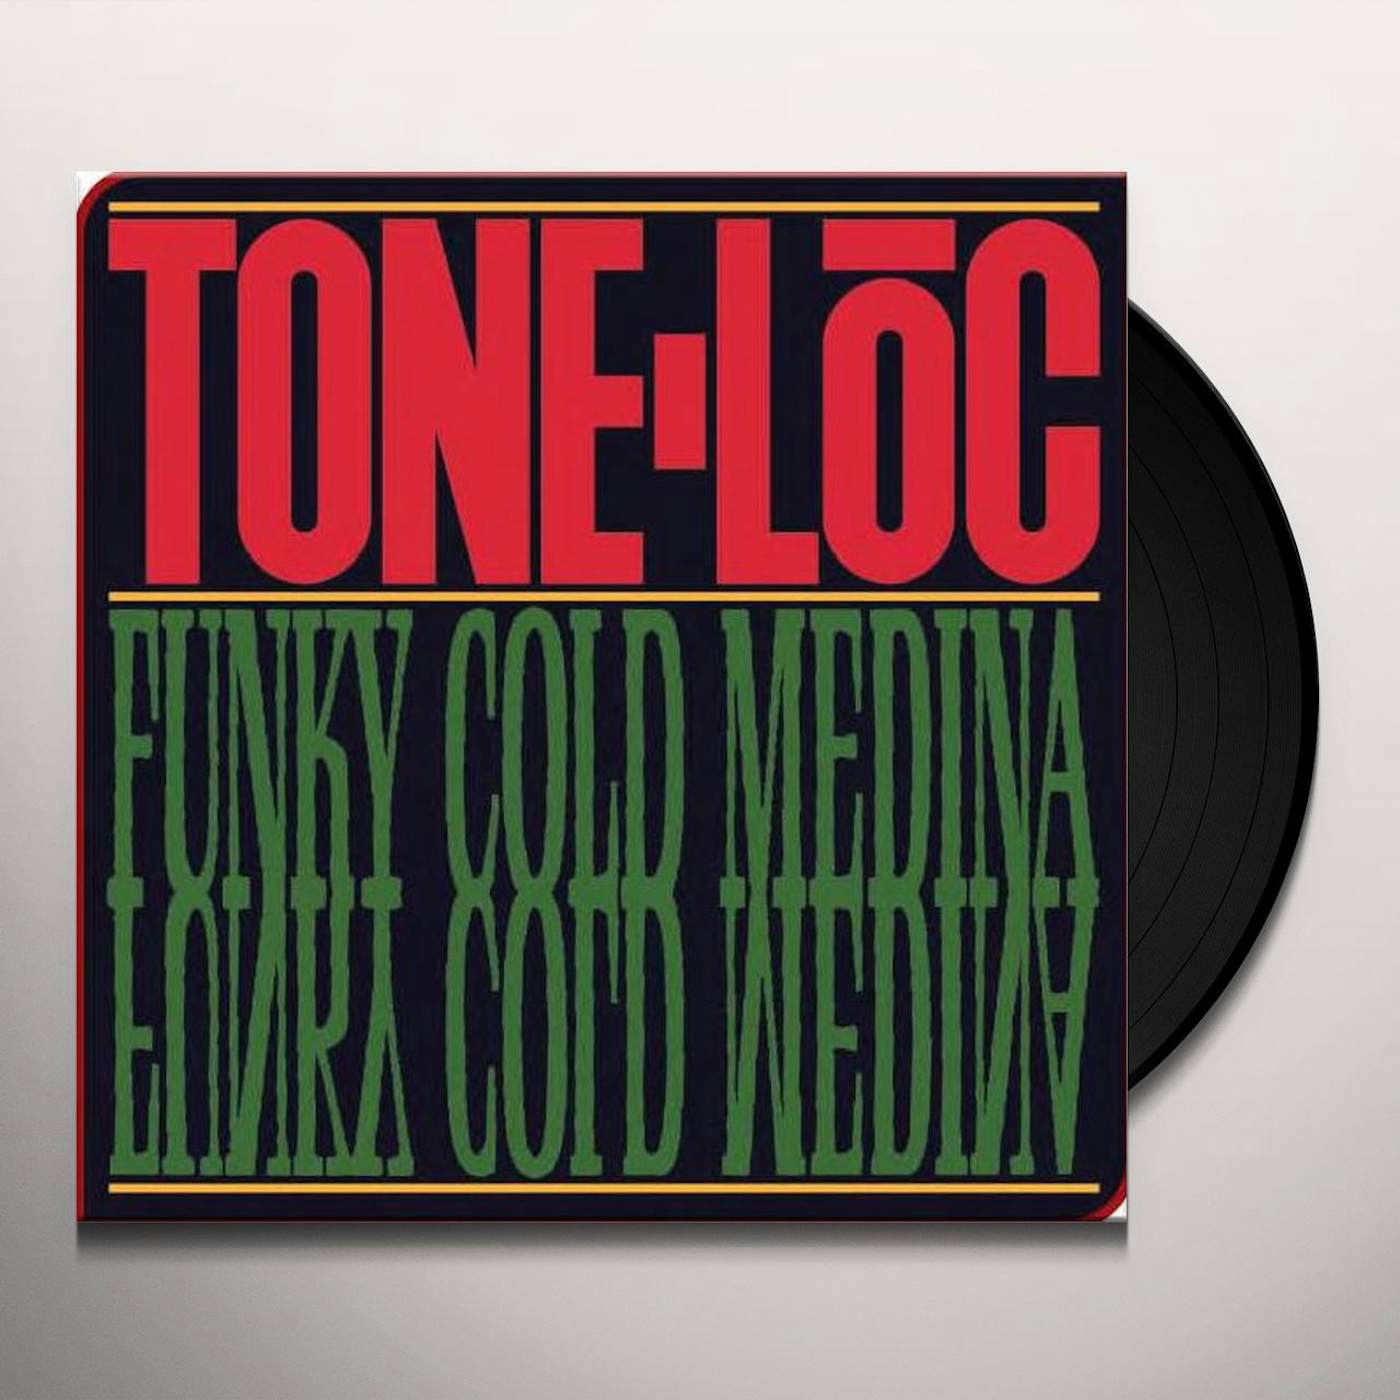 Tone-Loc FUNKY COLD MEDINA Vinyl Record